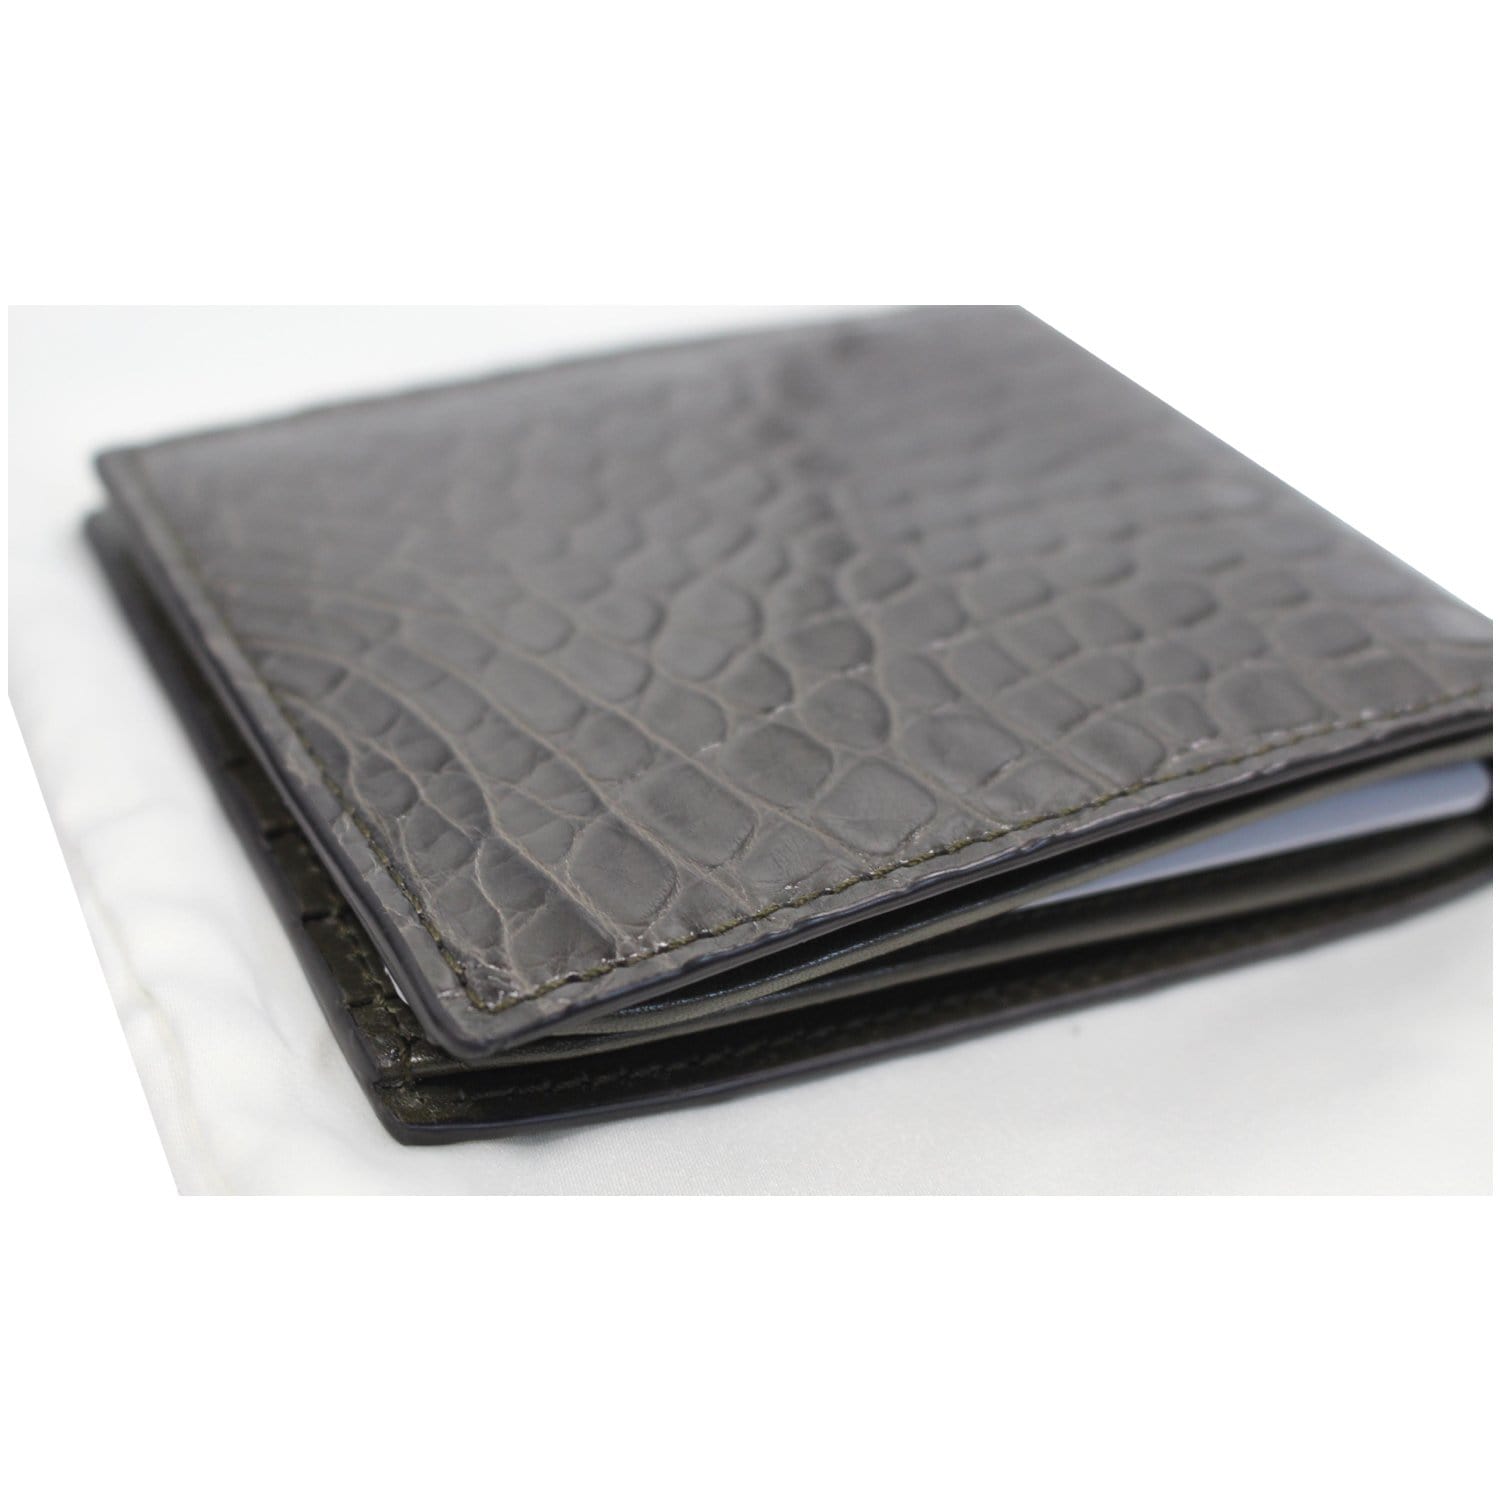 Brand New Men's Louis Vuitton Alligator Wallet